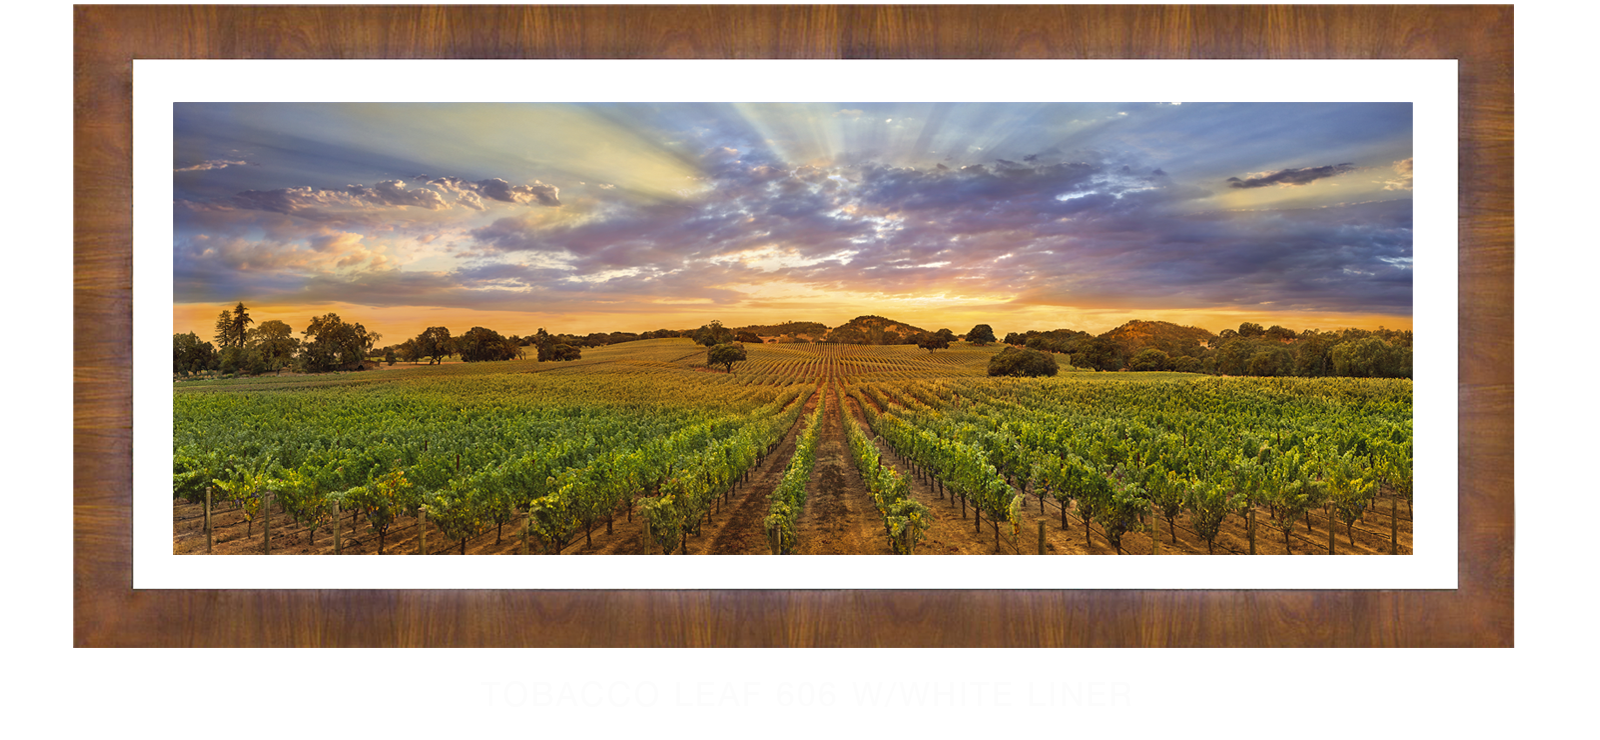 24NAPA LANDSCAPE Tobacco Leaf 606 w_Wht Liner T